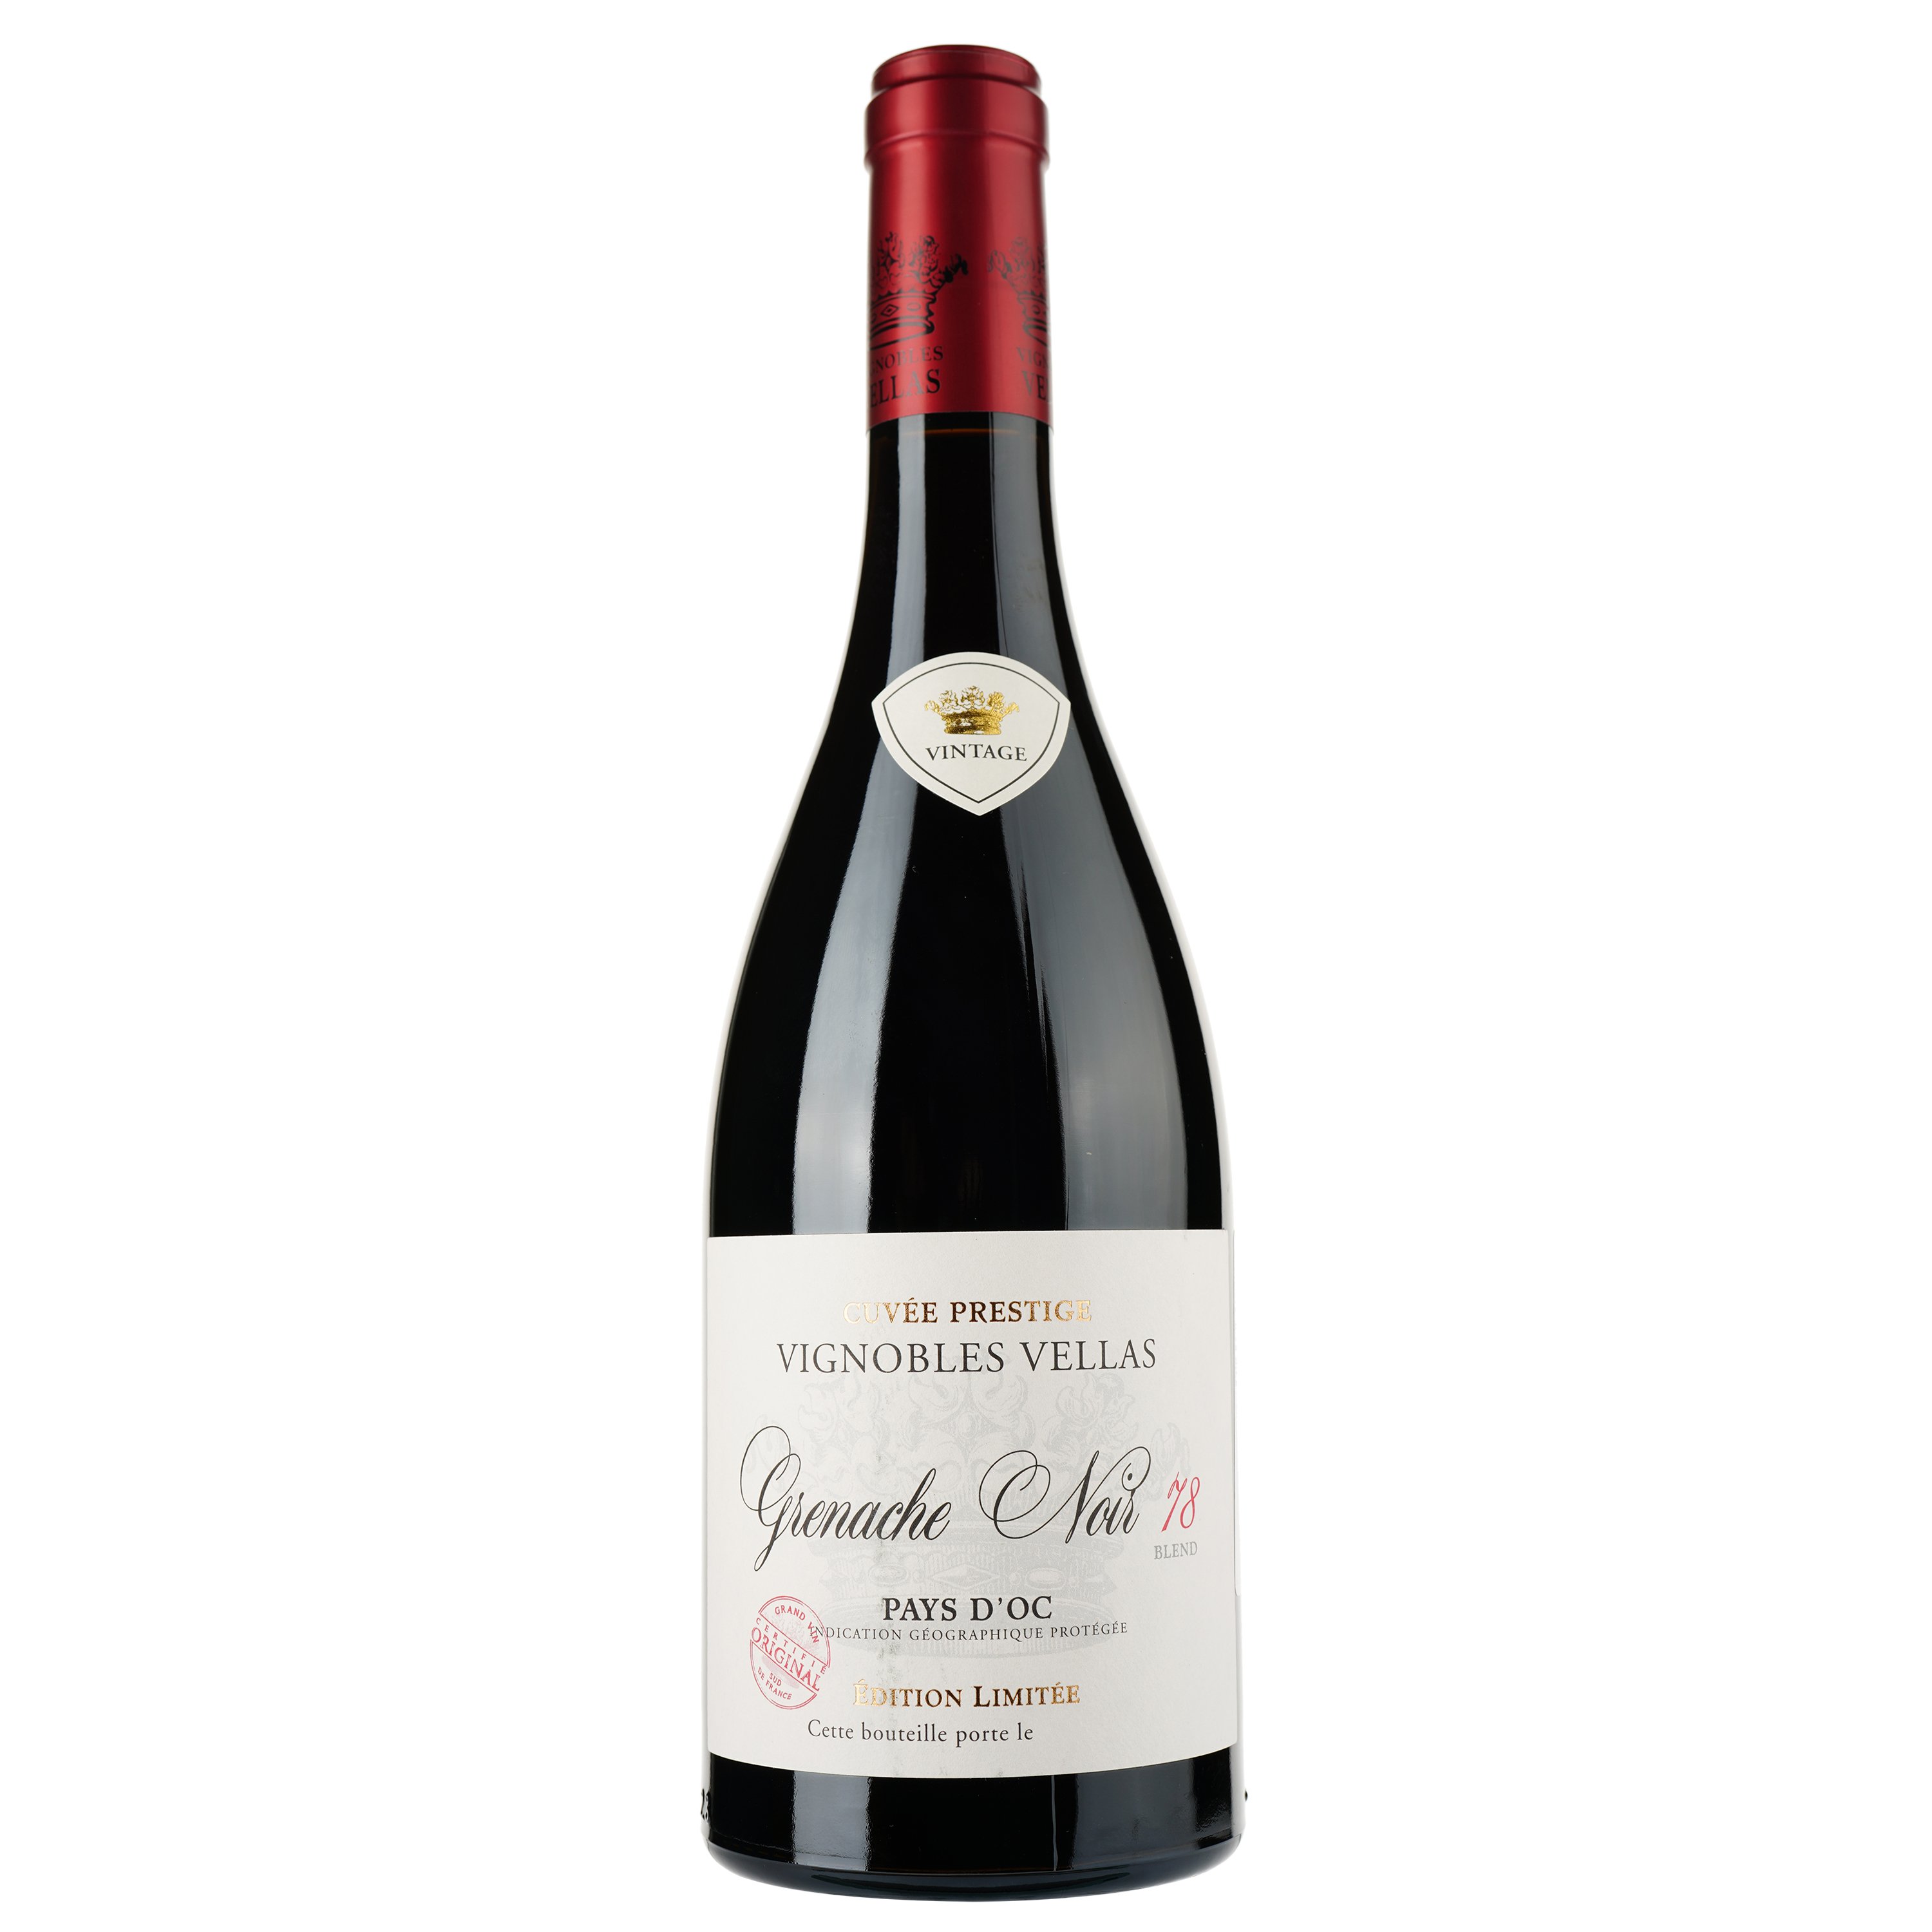 Вино Vignobles Vellas Grenache Noir 78 Blend Edition Limitee IGP Pays D'Oc, красное, сухое, 0,75 л - фото 1